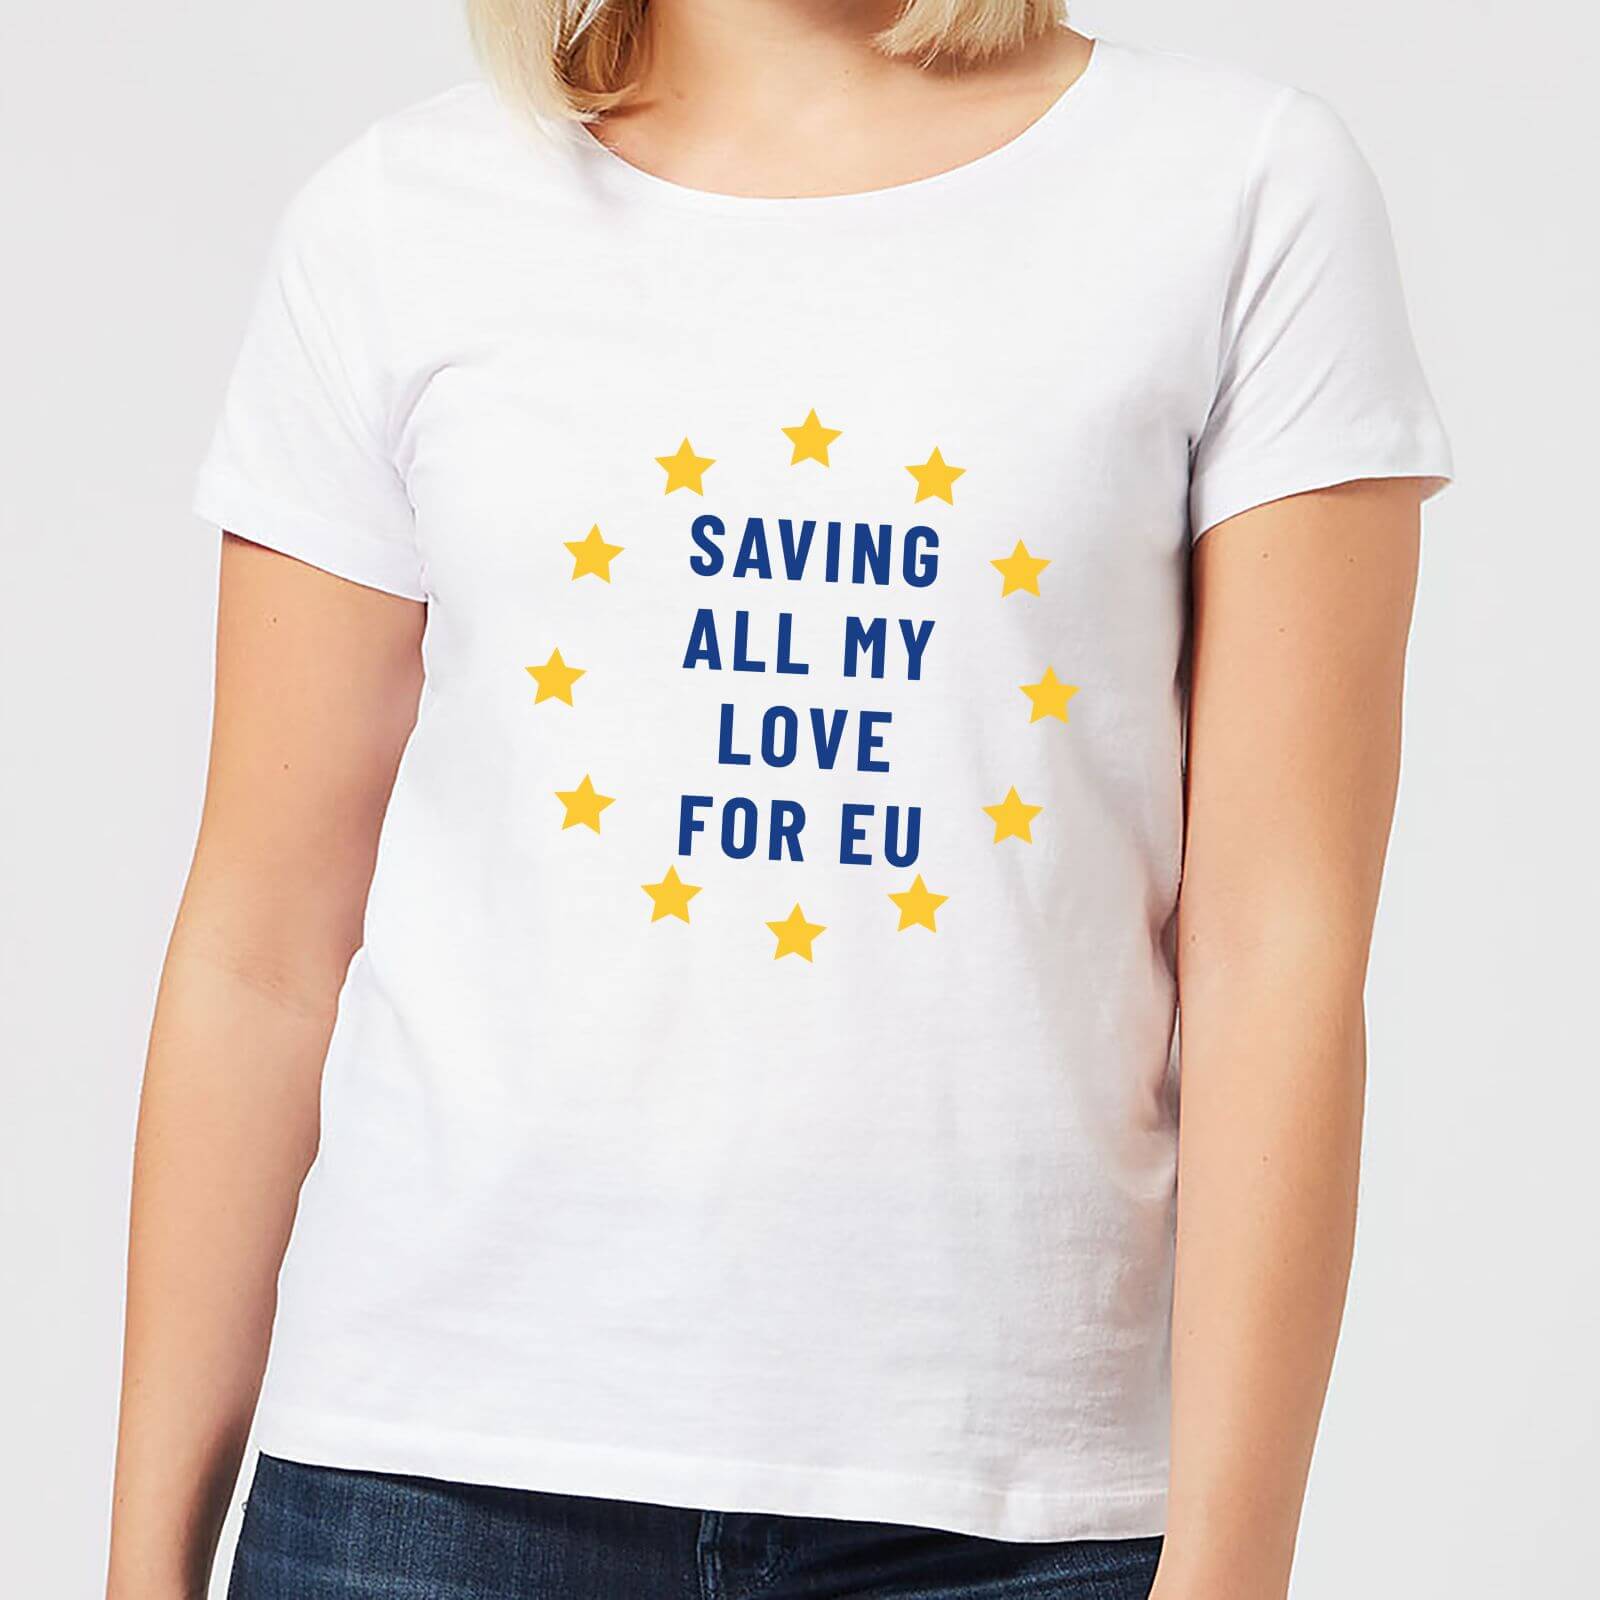 Saving All My Love For EU Women's T-Shirt - White - S - White